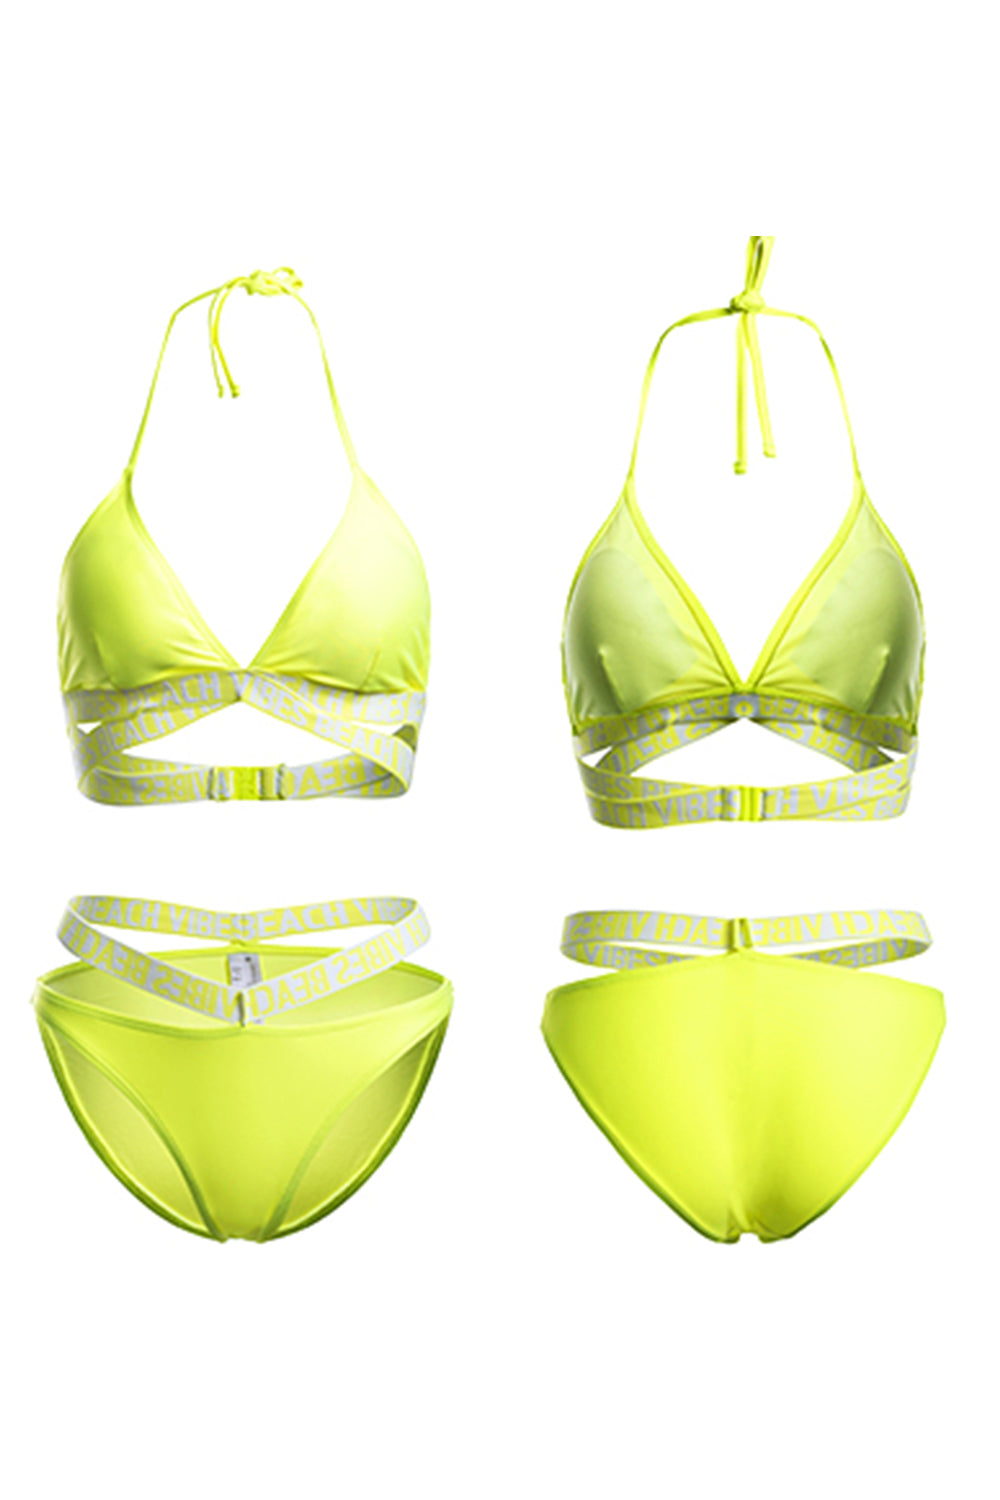 EZI Sexy Solid color Peek-a-boo Bikini Bottom Bikini Sets